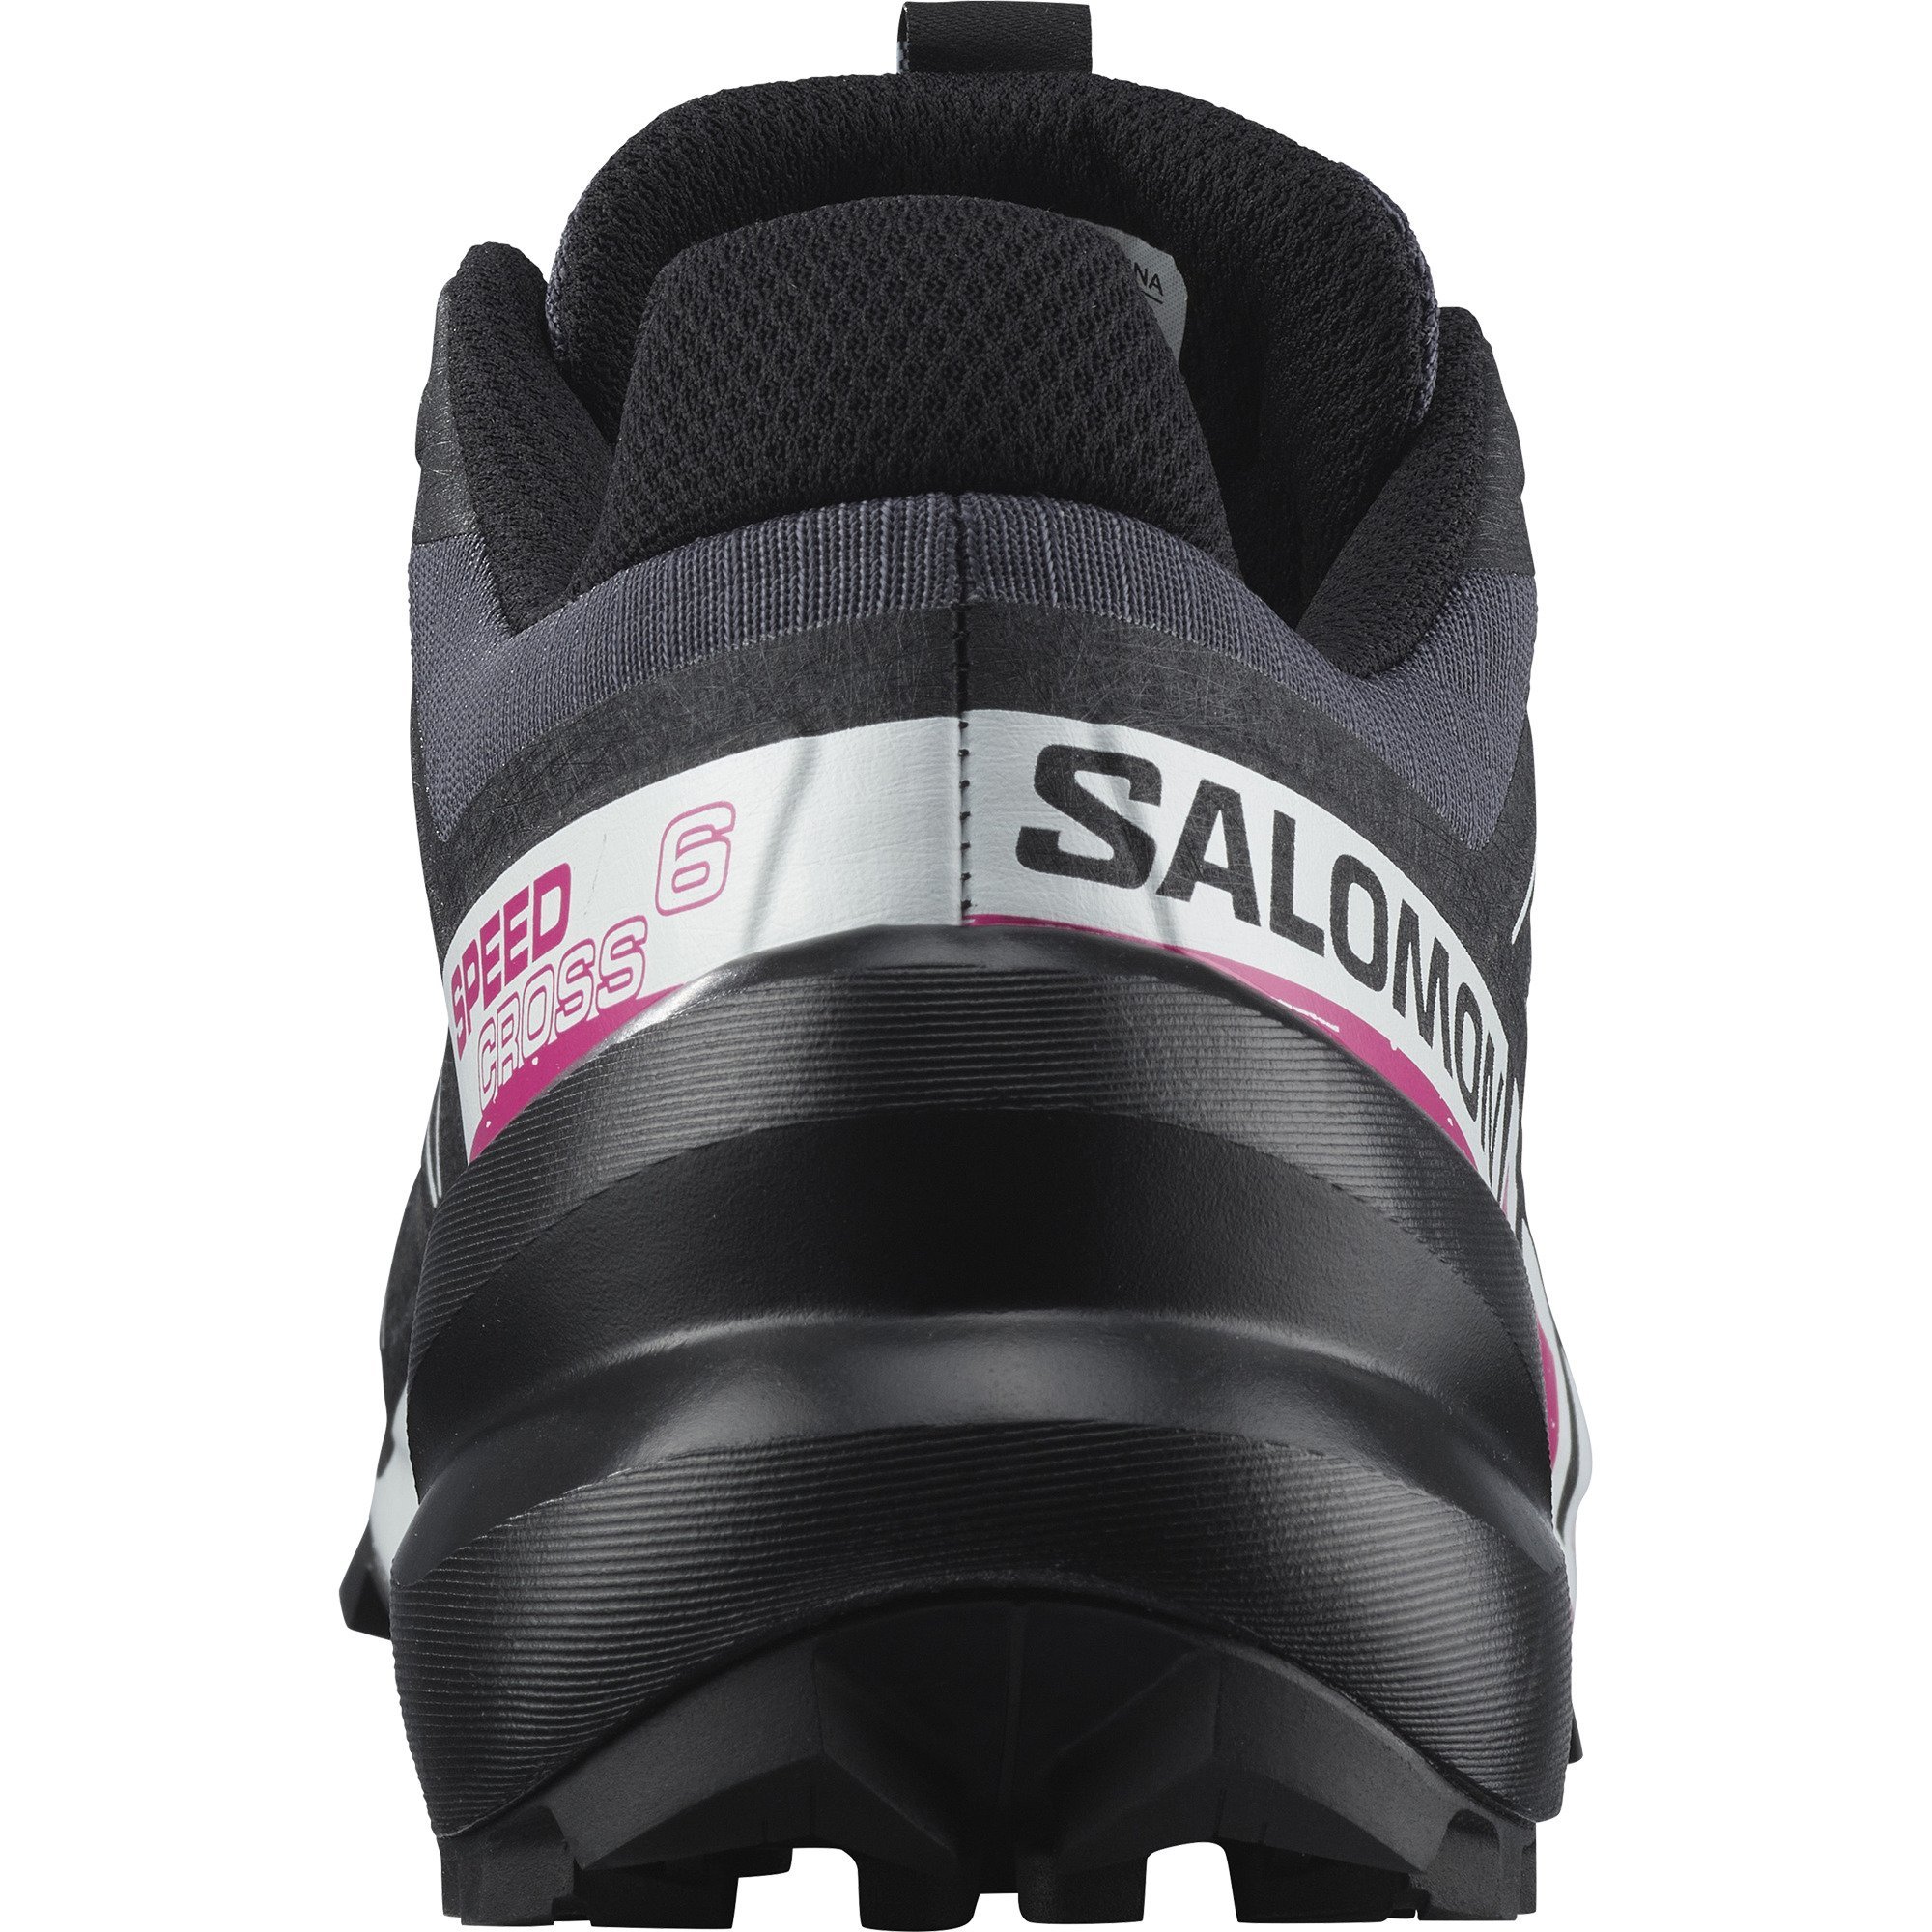 Obuv Salomon Speedcross 6 W - šedá/biela/ružová